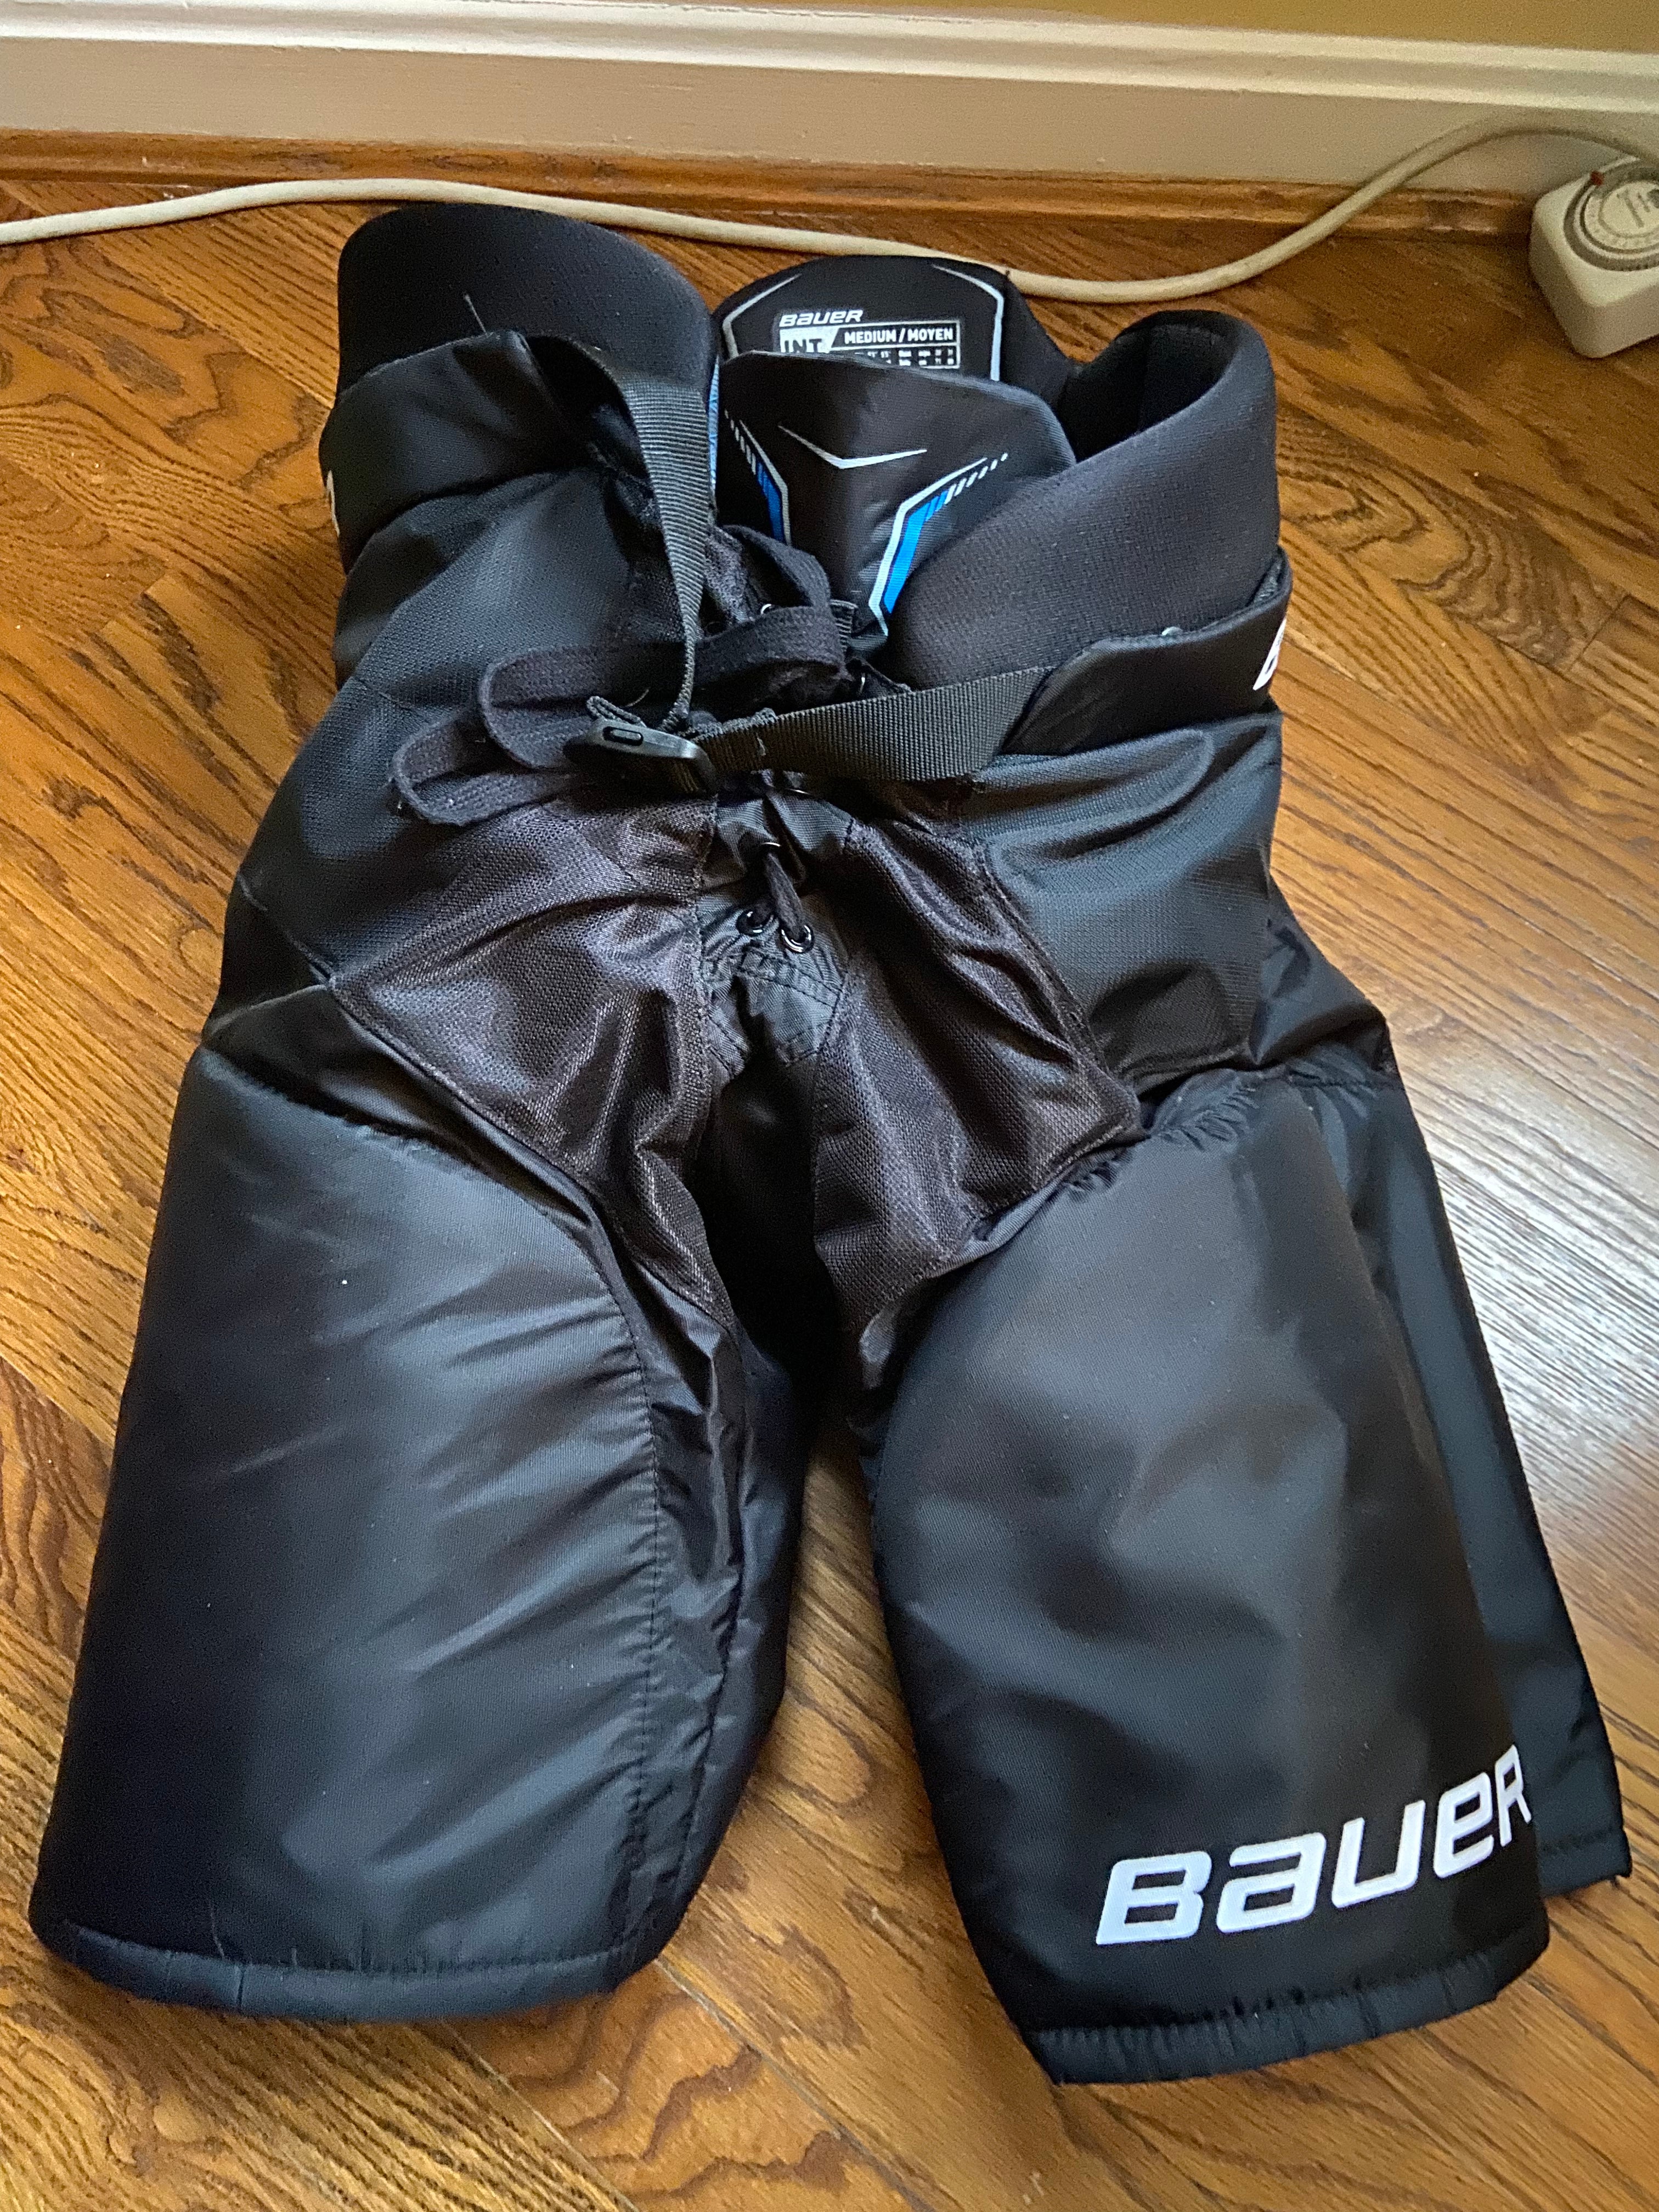 Bauer X Hockey Shorts